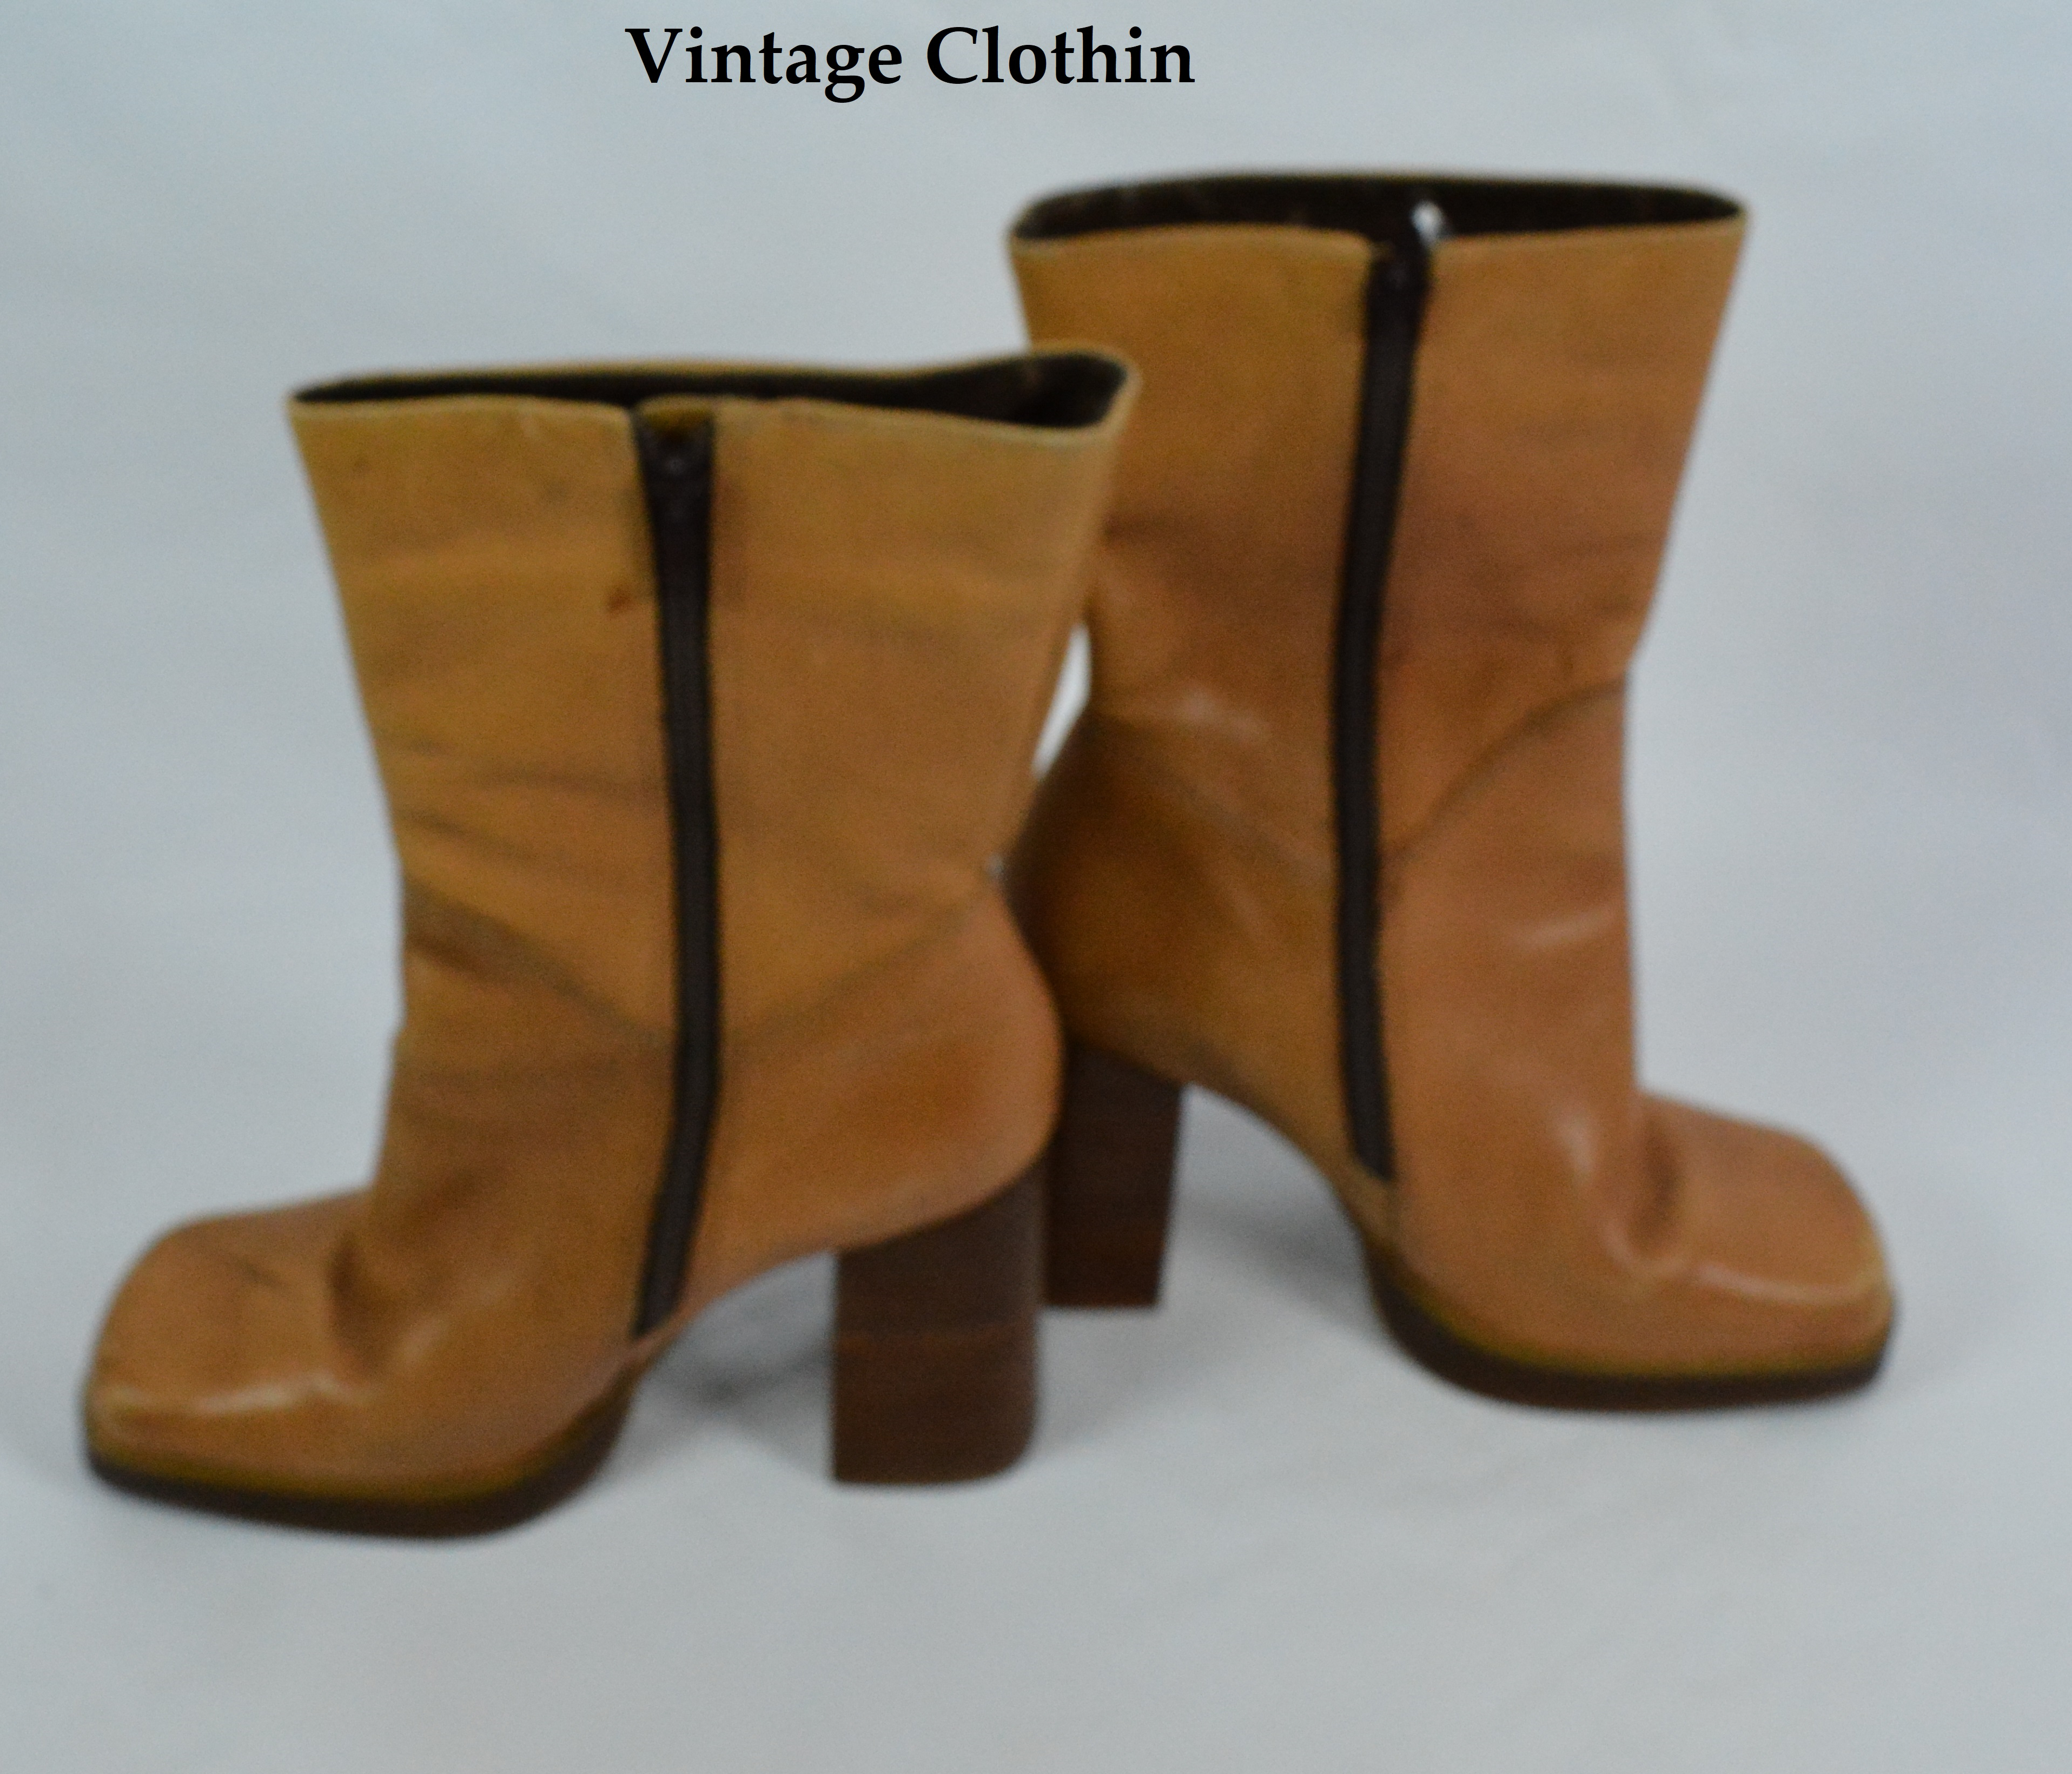 70s style platform boots